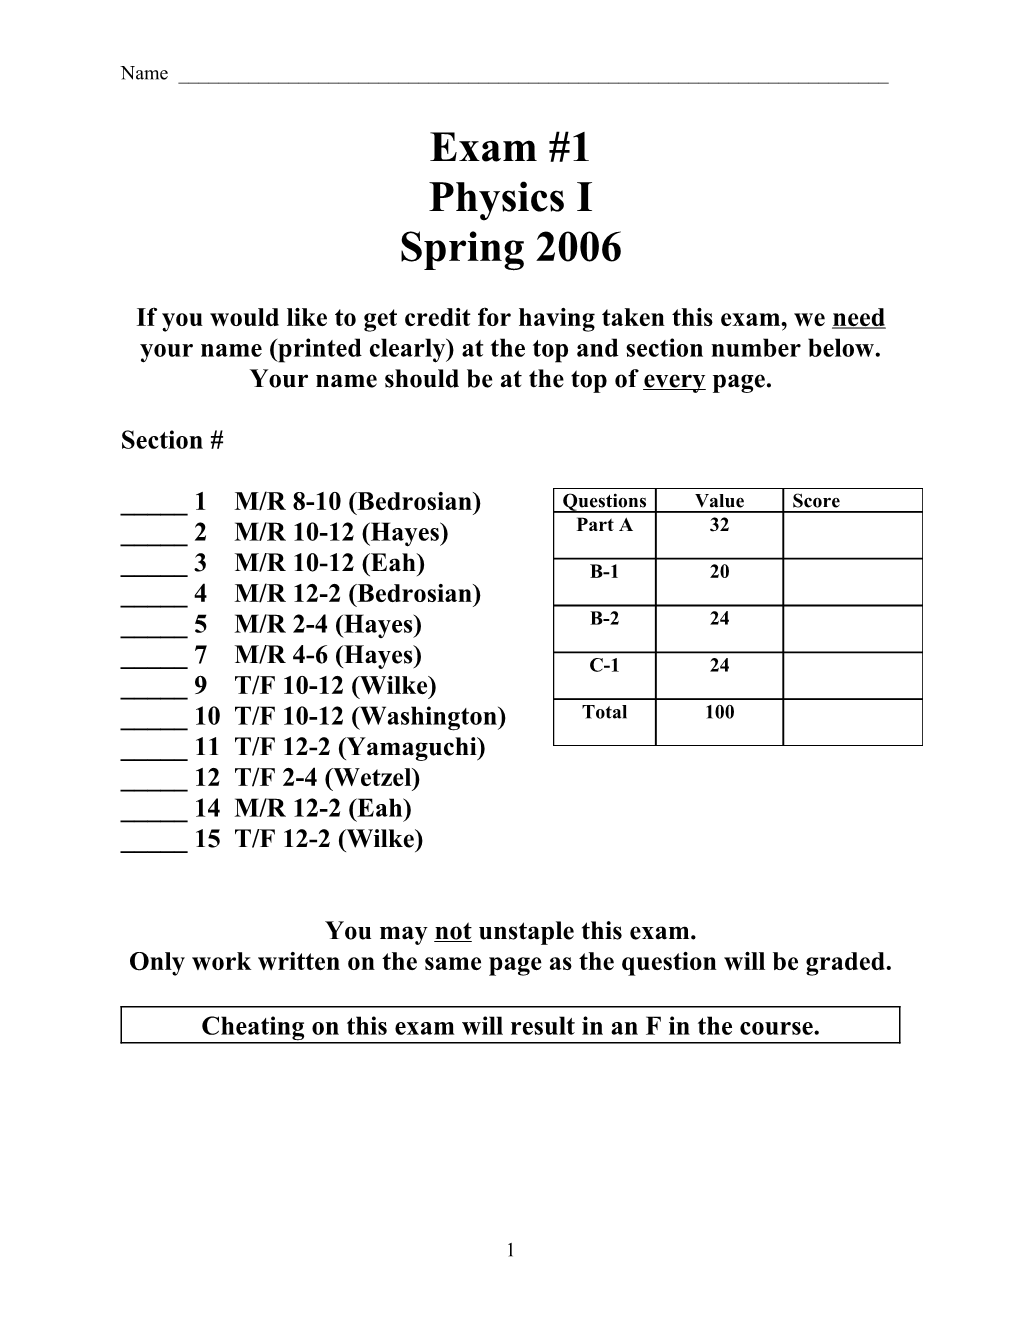 Physics I Exam 3 Spring 2003